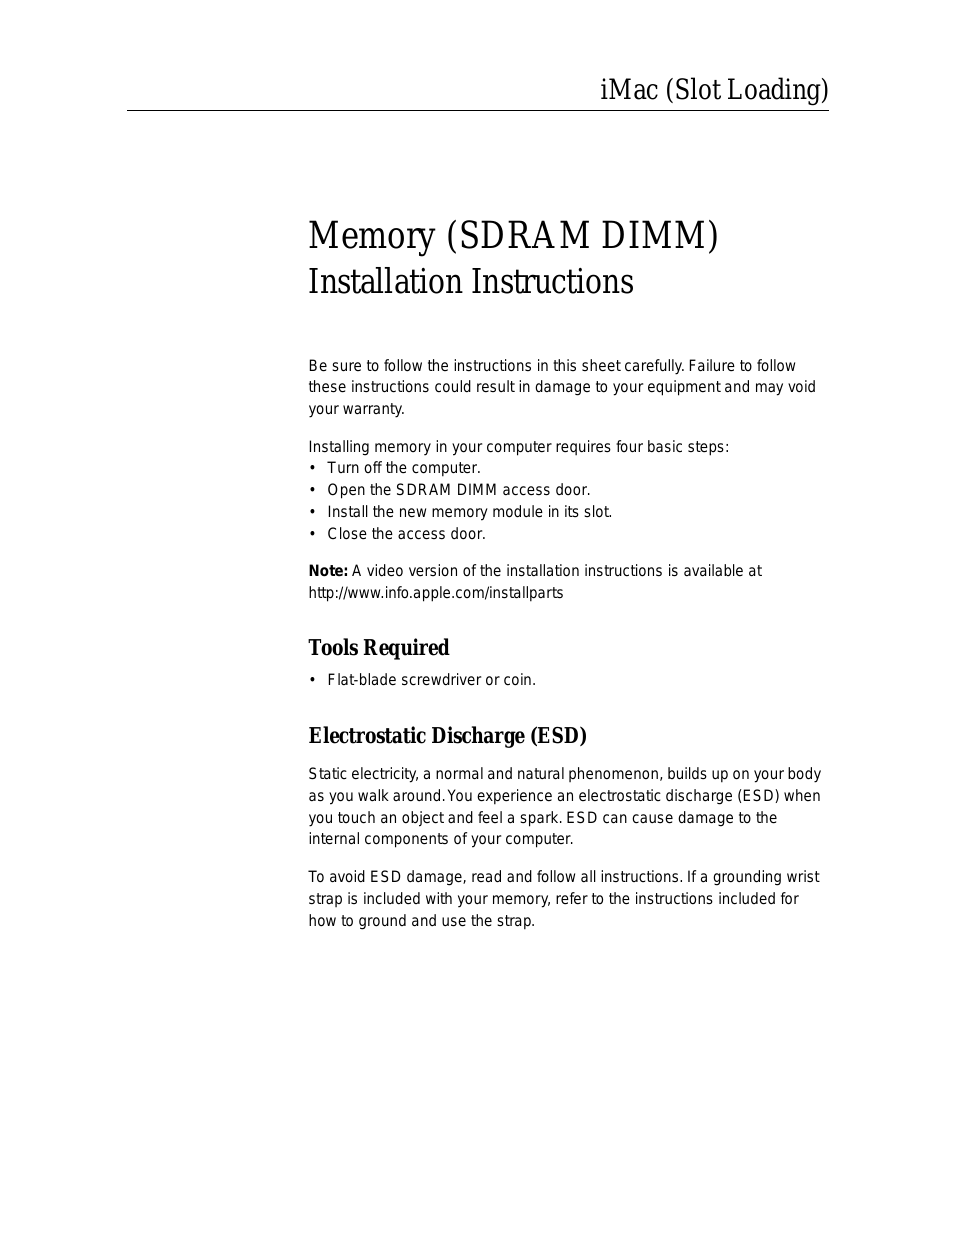 SDRAM DIMM